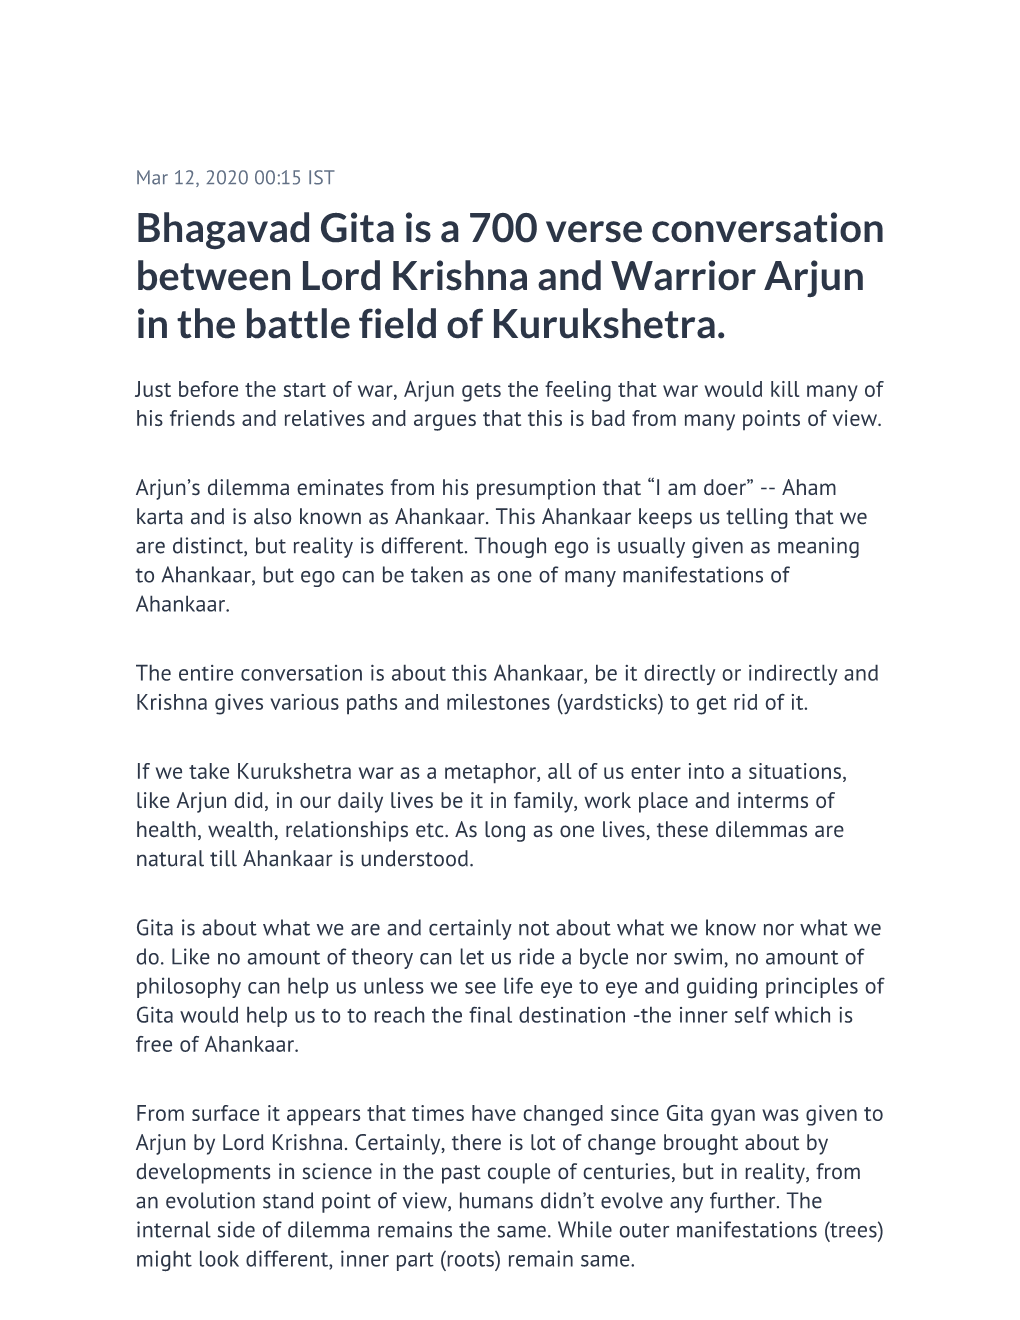 Bhagavad Gita Is a 700 Verse Conversation Between Lord Krishna and Warrior Arjun in the Battle Field of Kurukshetra